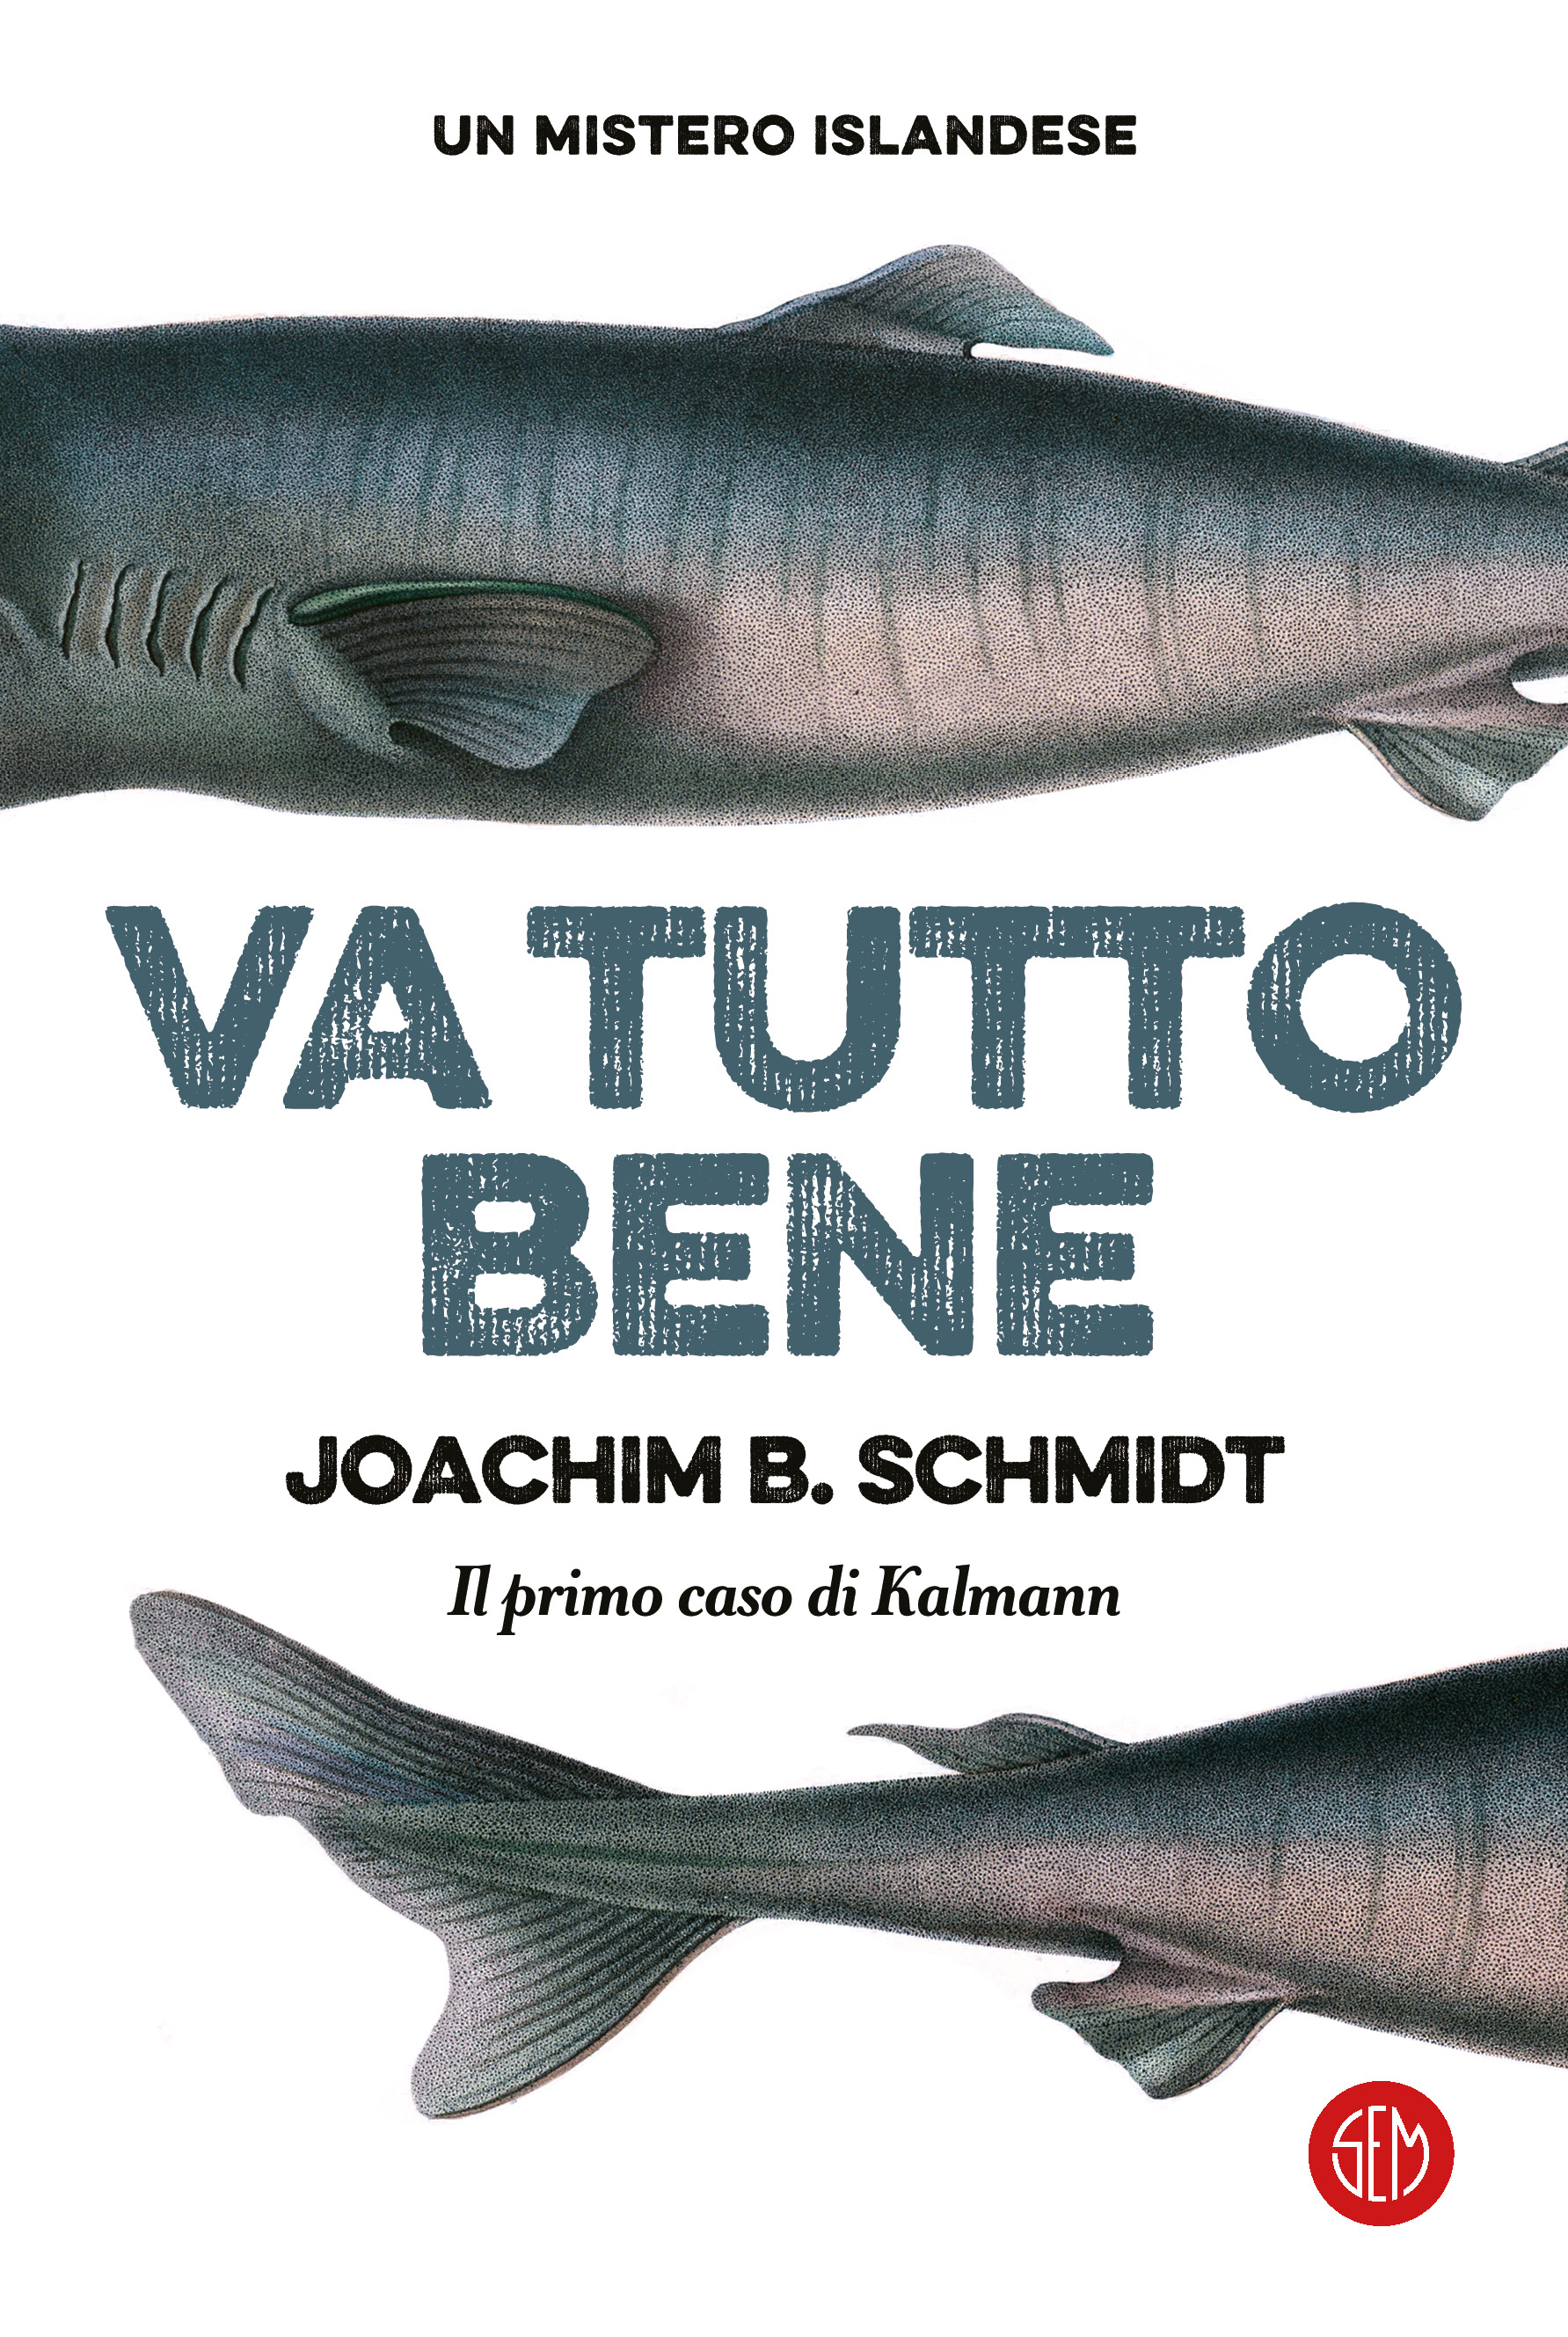 The cover of the Italian edition of Joachim B. Schmidt's Kalmann